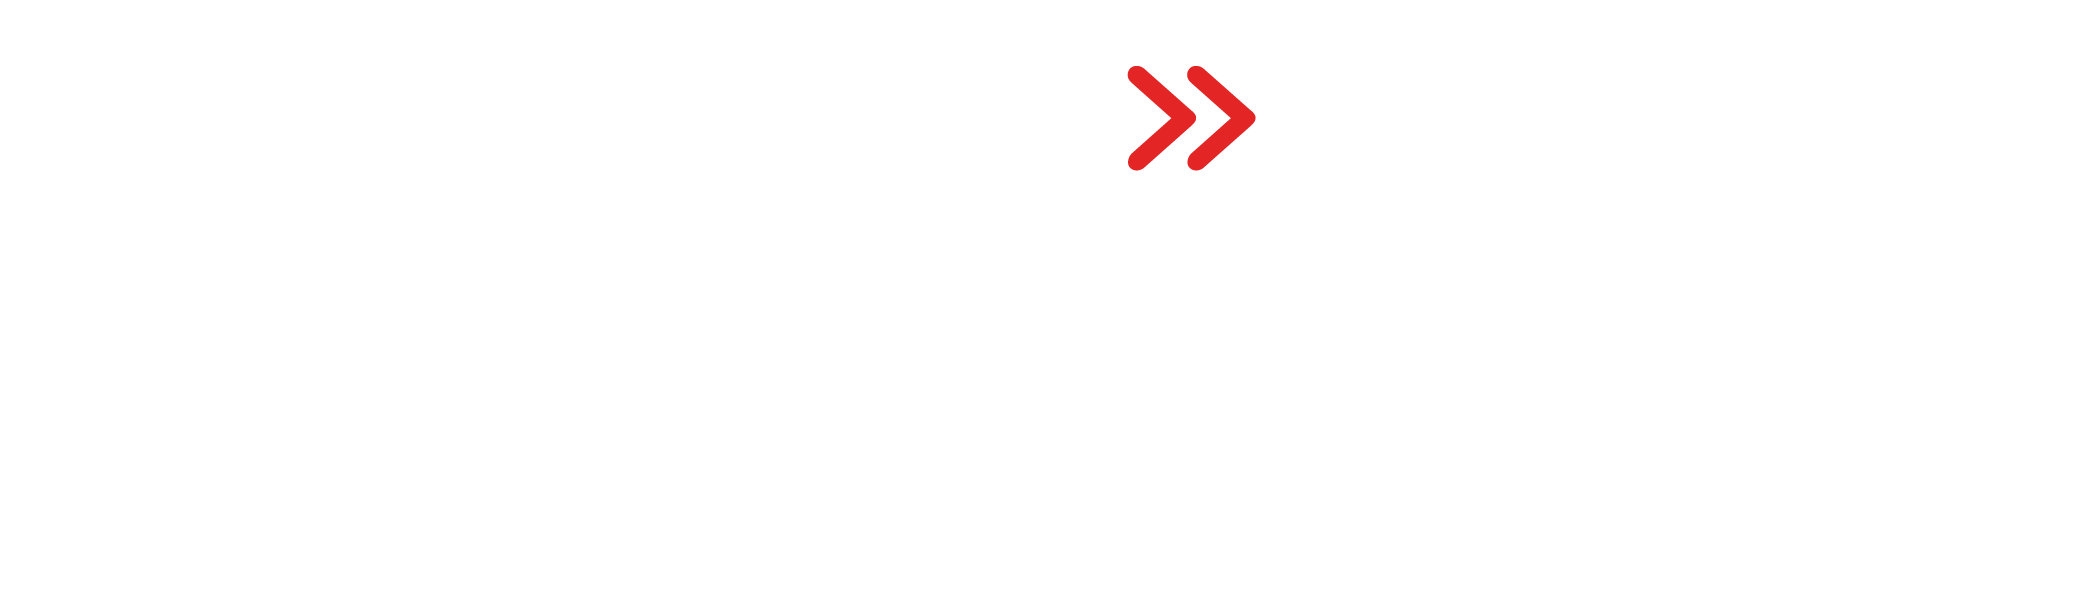 IPMA.hr Logo